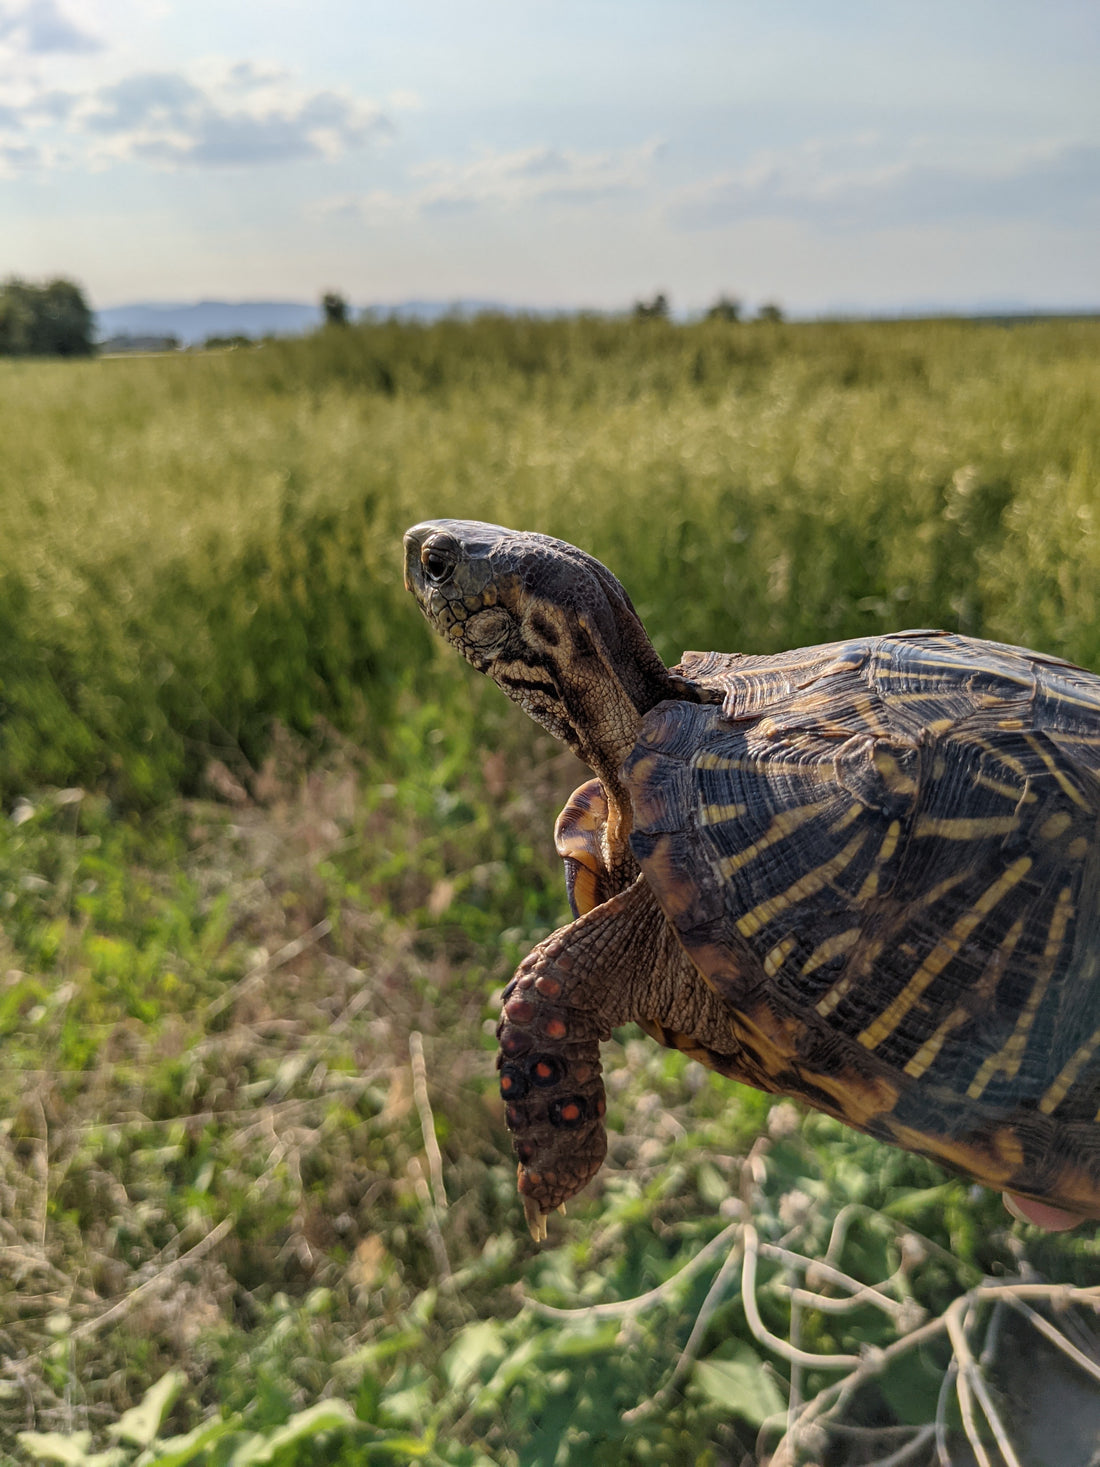 Impact of Urban Development on Wild Ornate Box Turtles in Colorado’s Front Range